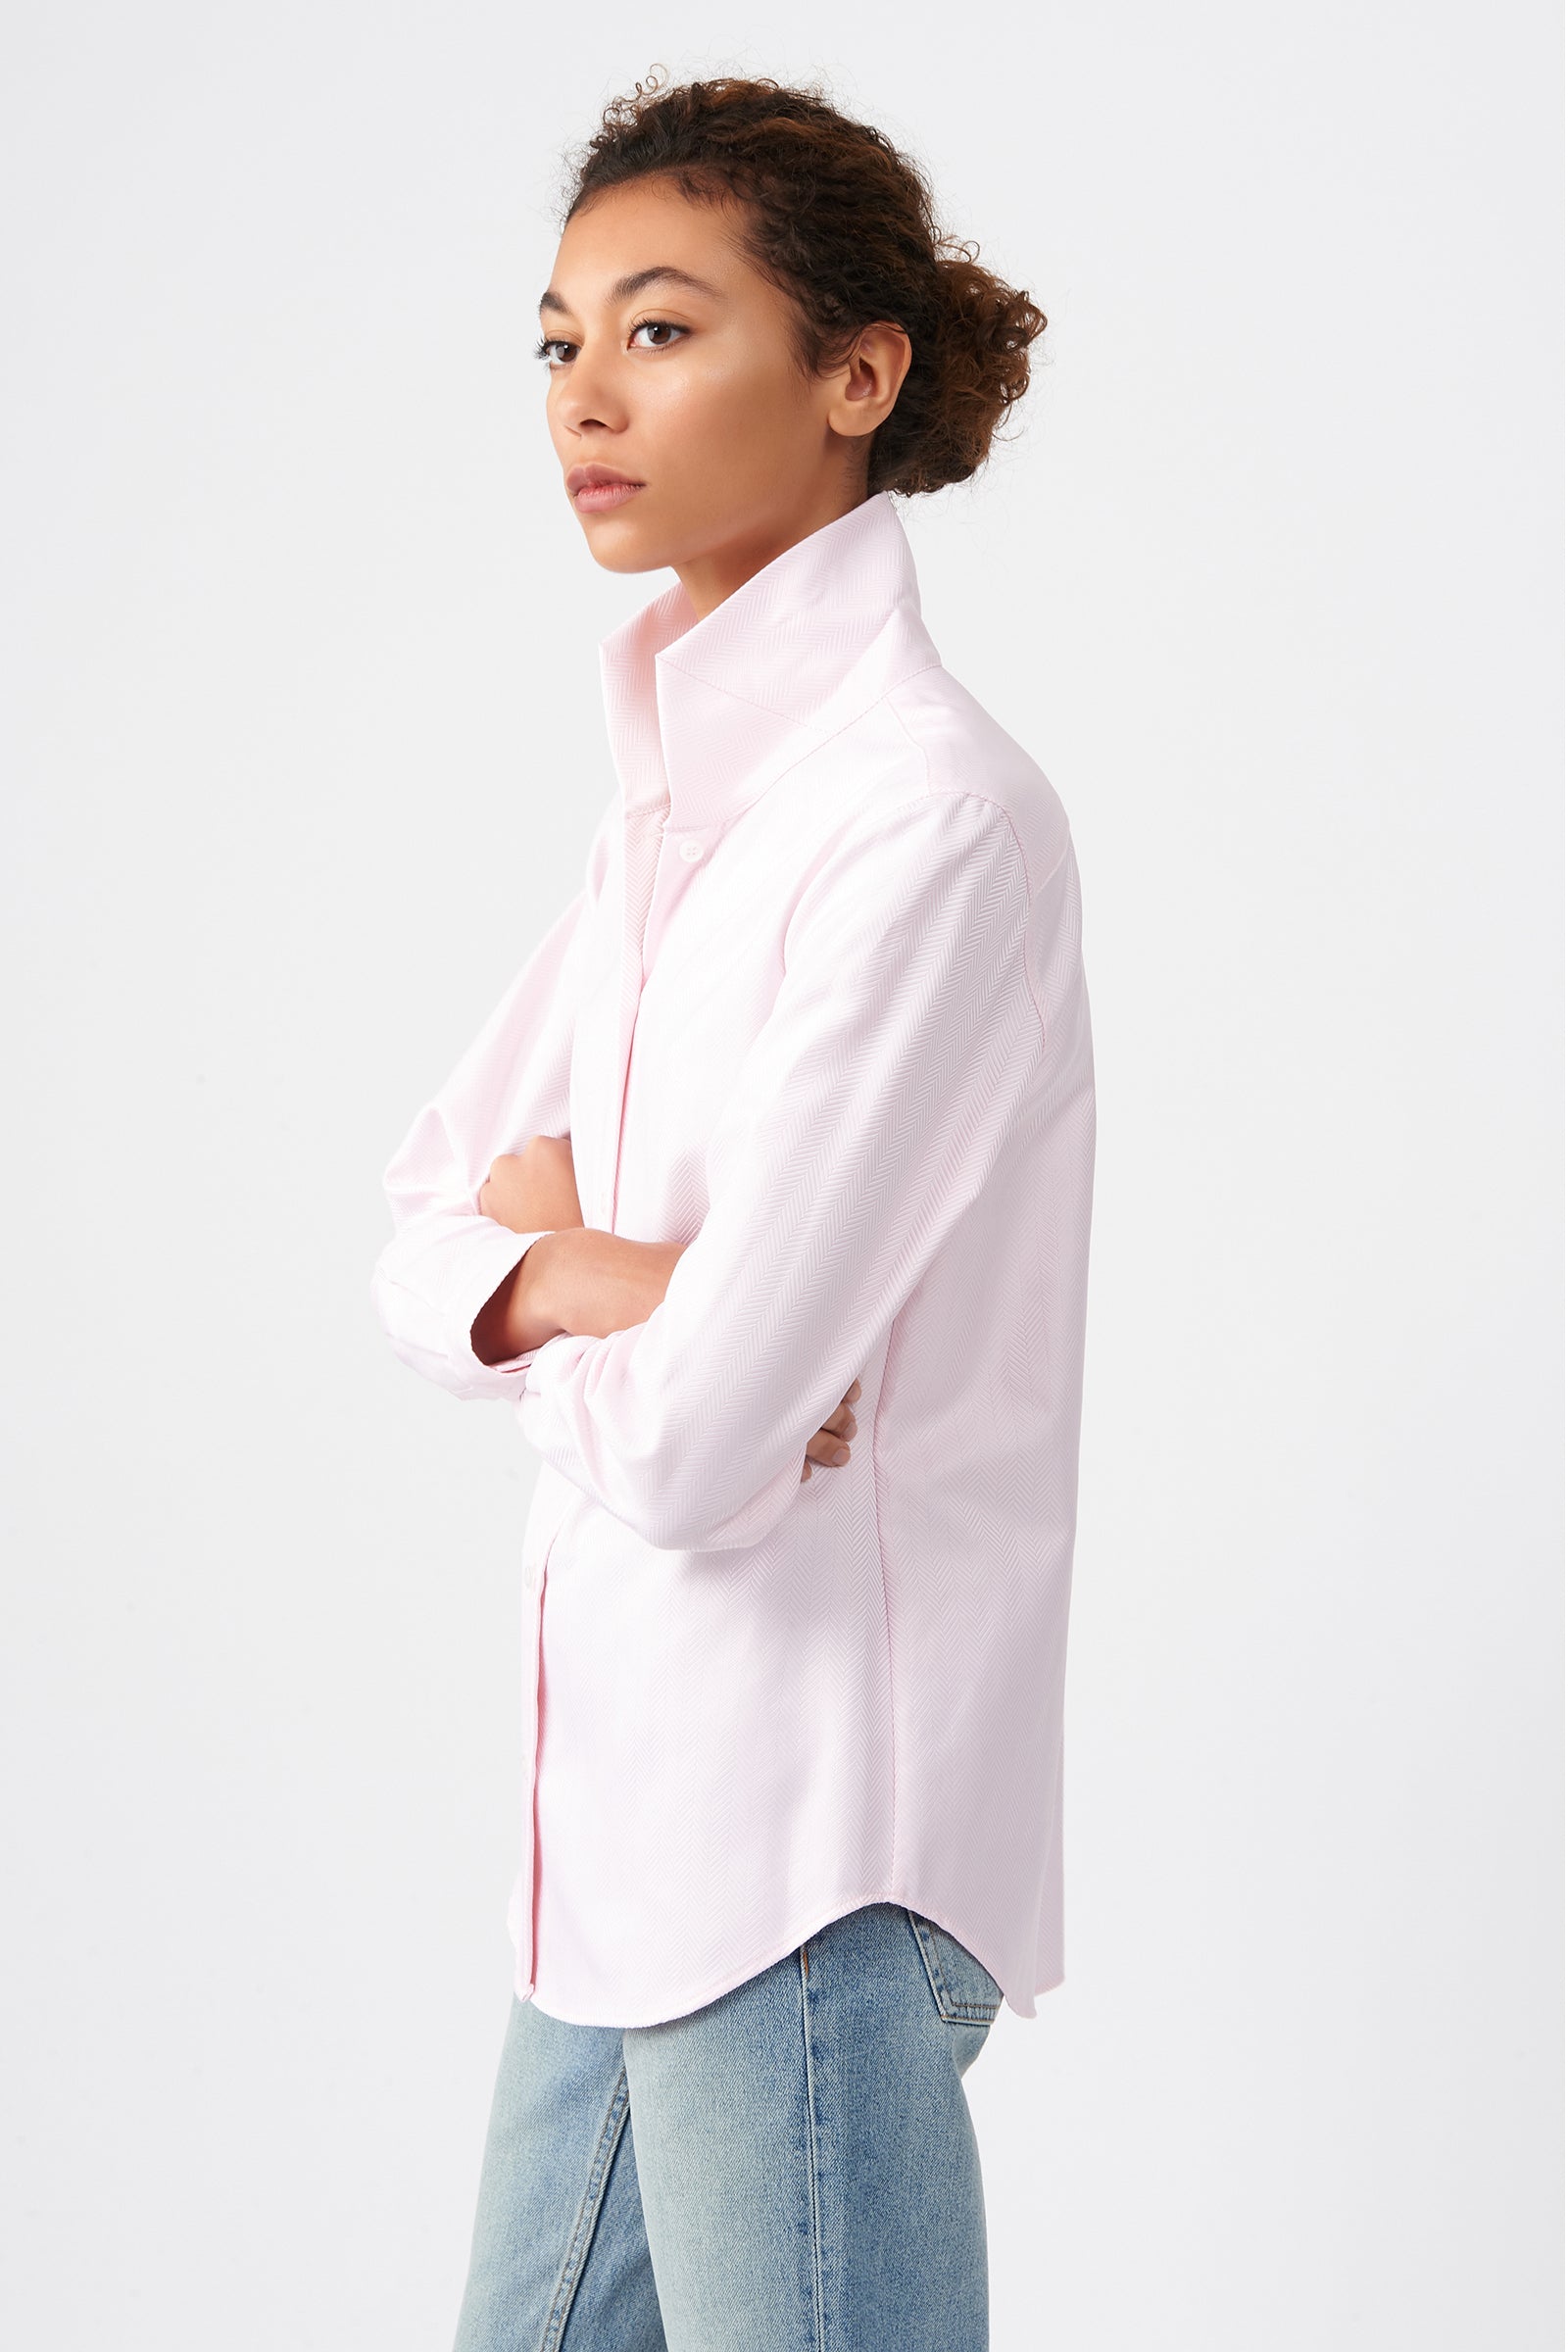 Kal Rieman Ginna Box Pleat Shirt in Pink Herringbone on Model Side View